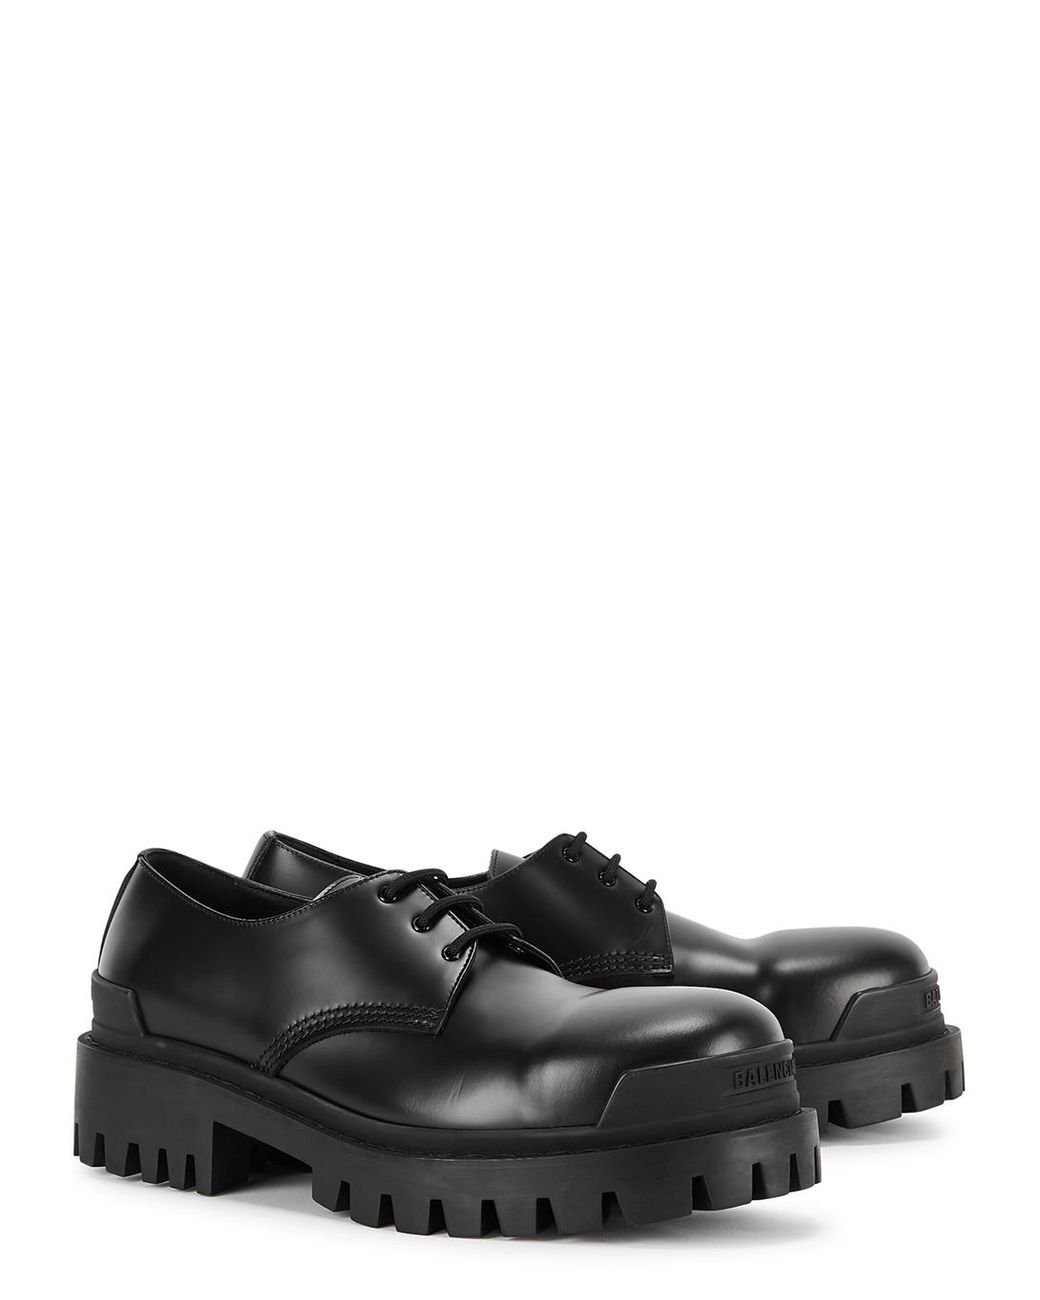 Balenciaga Strike Black Leather Derby Shoes for Men | Lyst